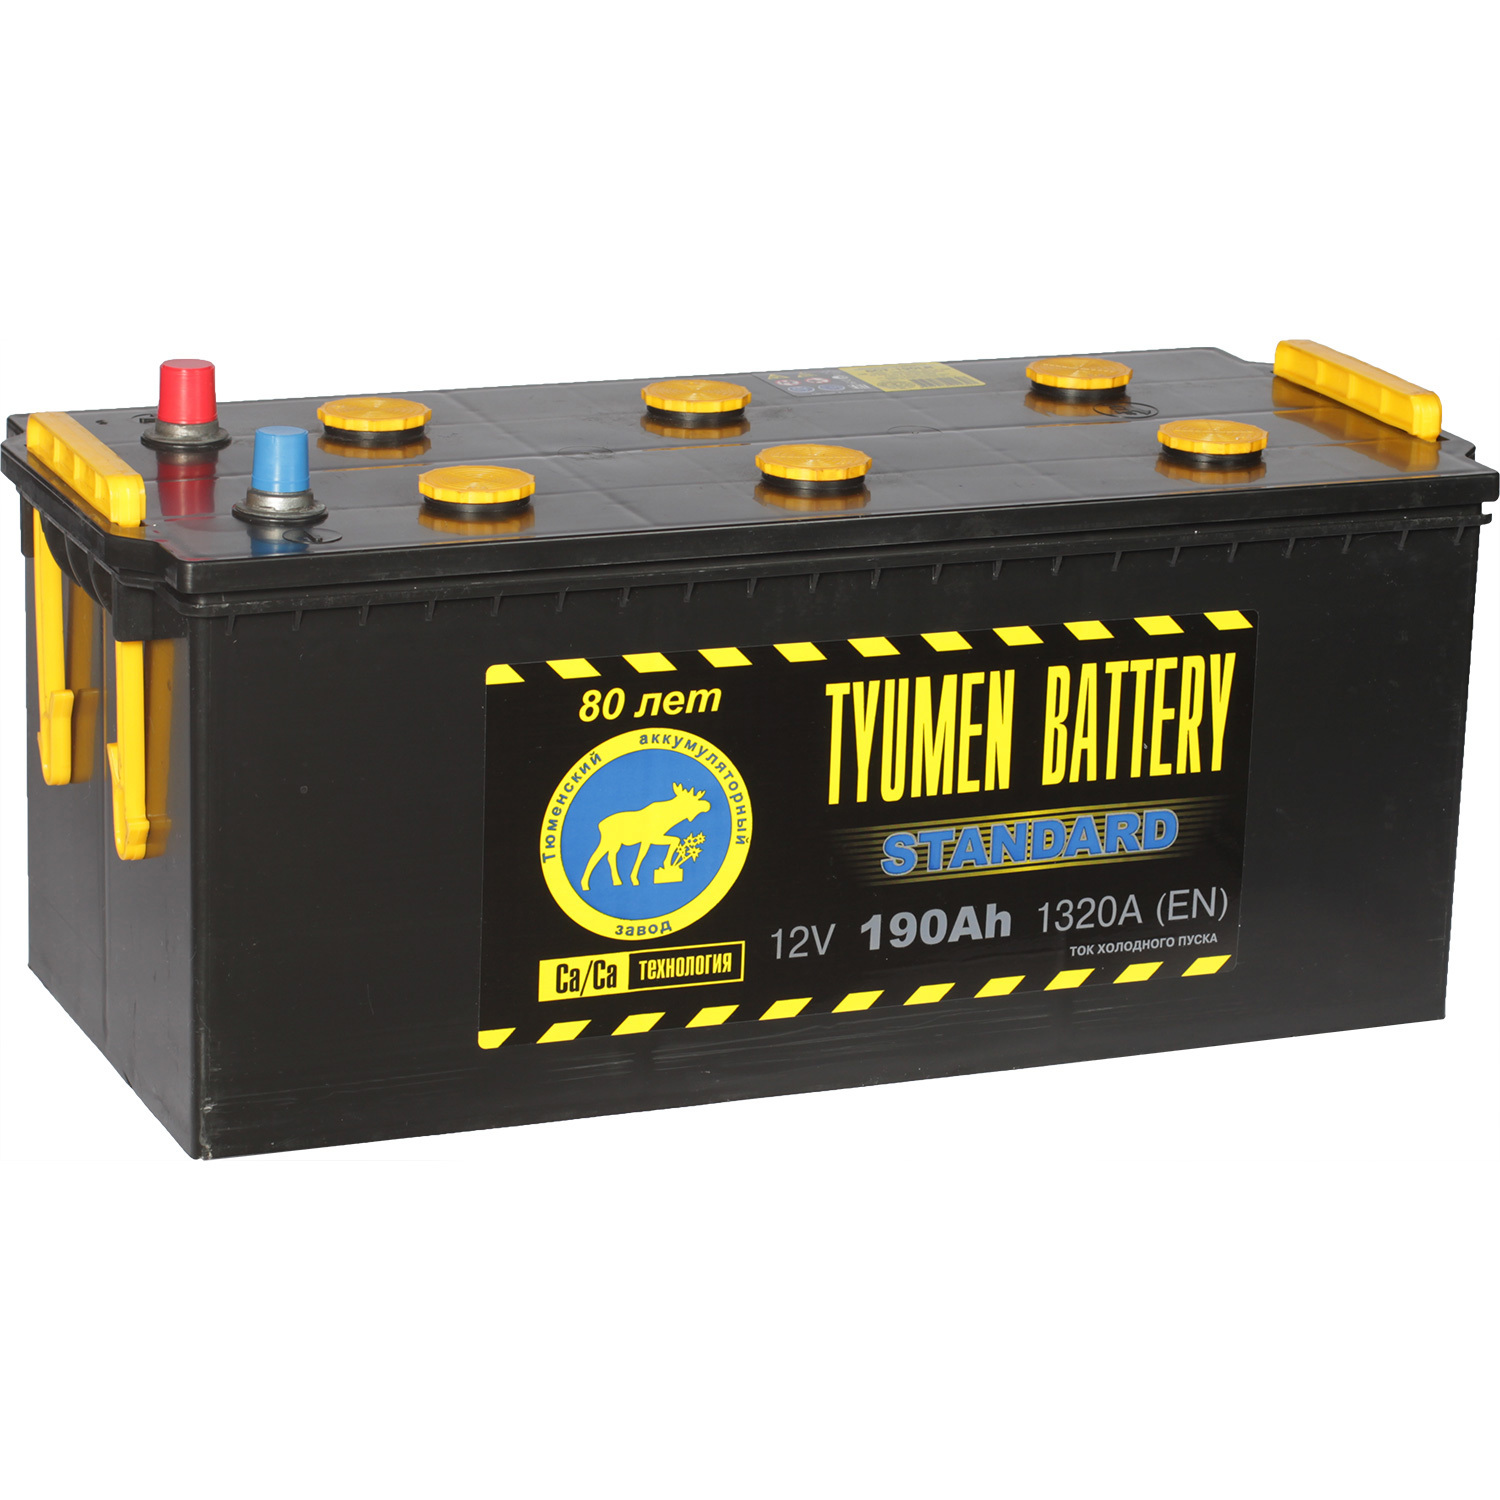 Tyumen Battery Грузовой аккумулятор Tyumen Battery Standard 190Ач о/п конус spark грузовой аккумулятор spark 190ач п п конус